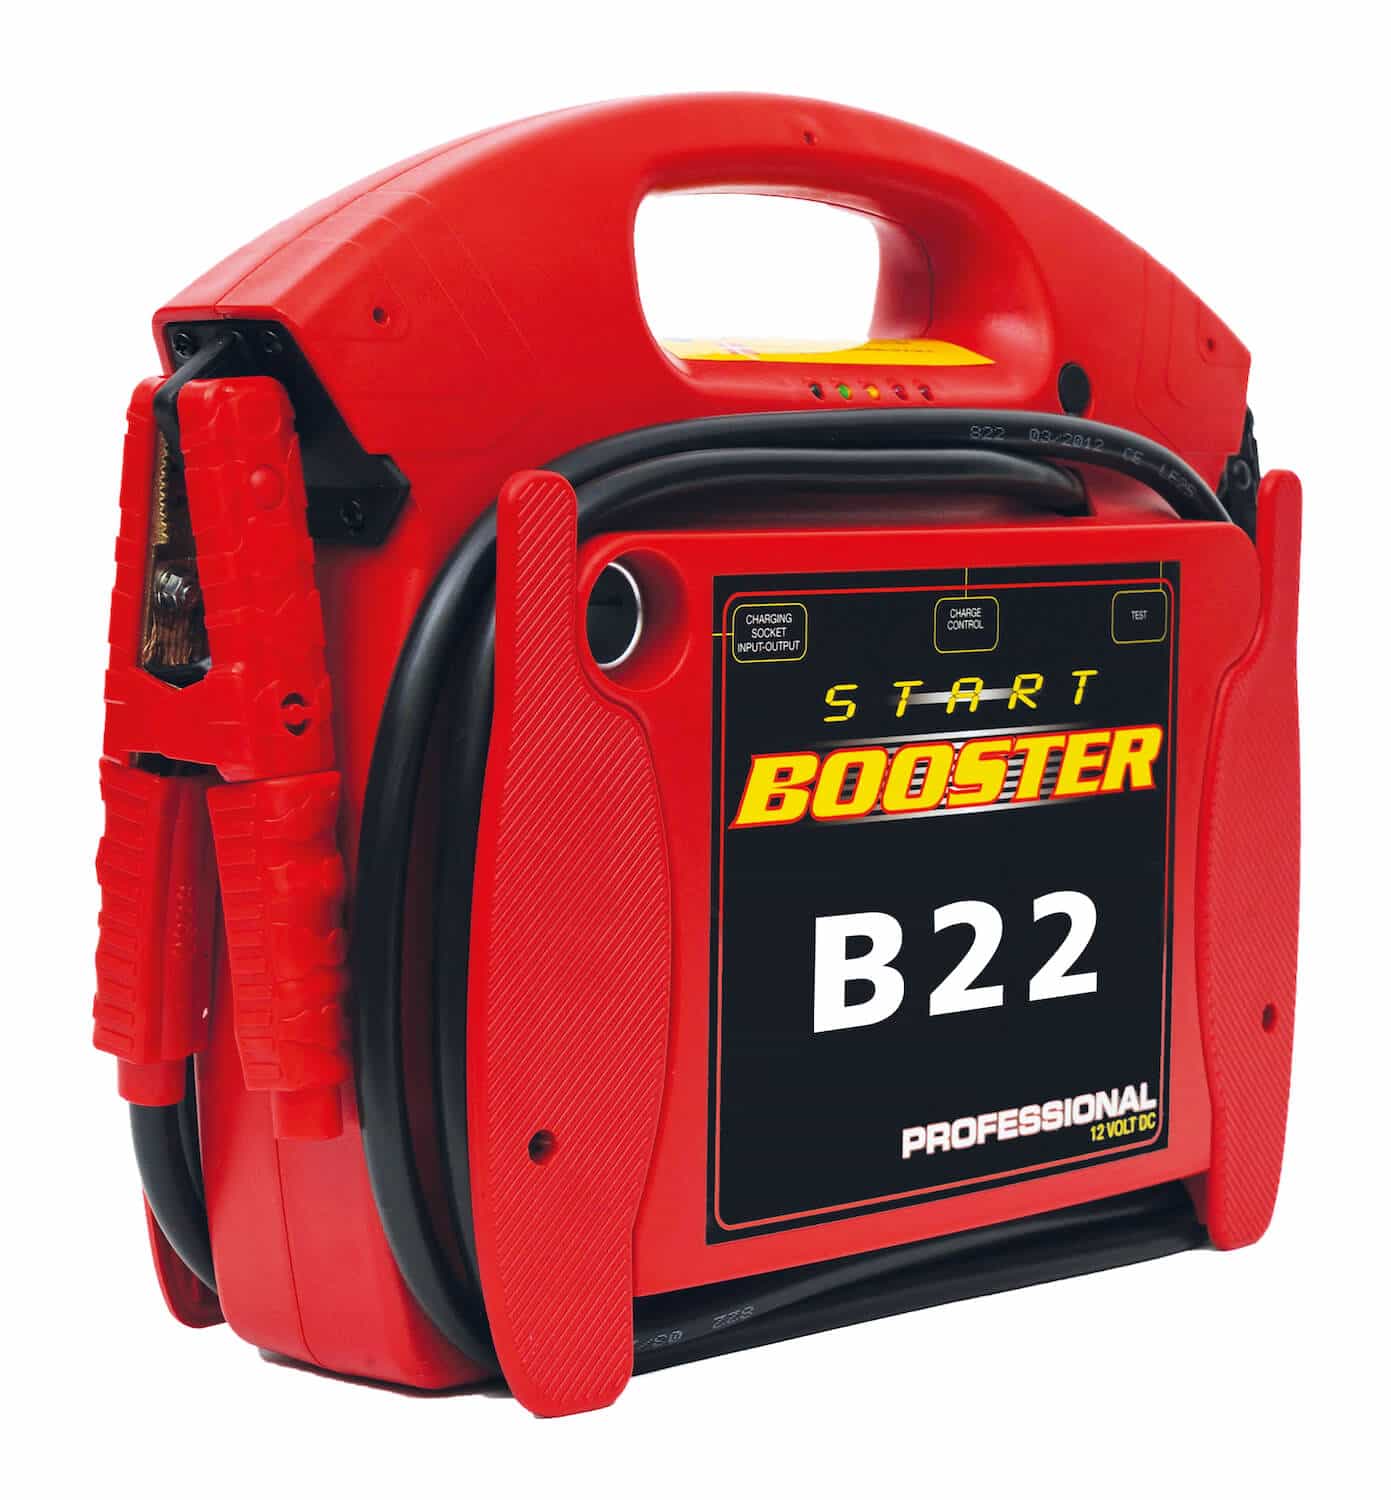 Batterieladegerät Booster B 22 günstig kaufen ᐅ Unisales GmbH